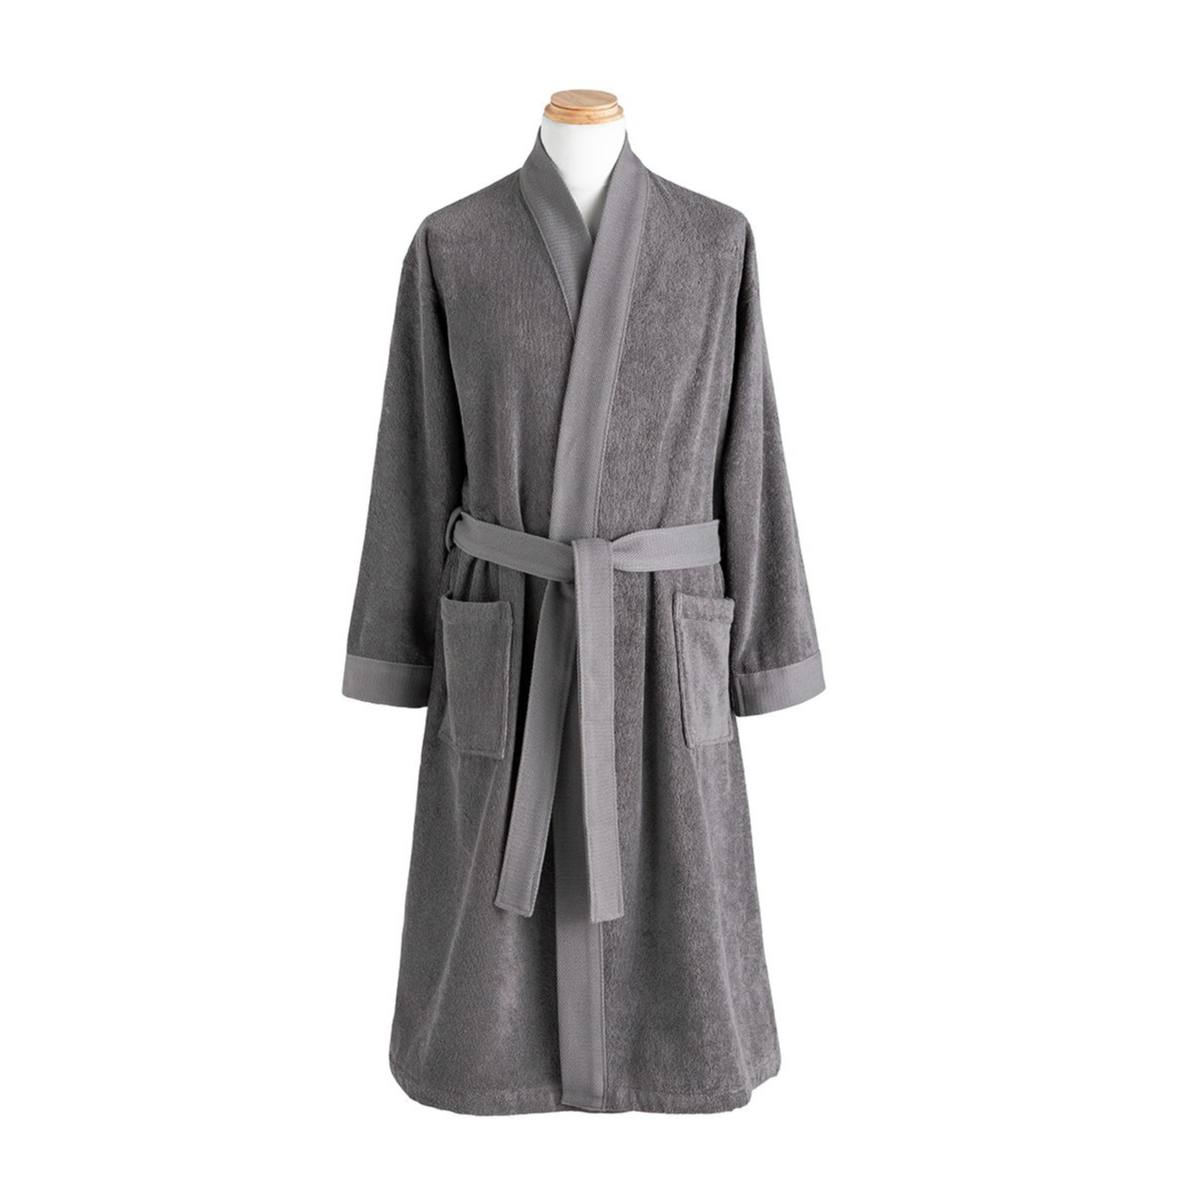 ess-kimo bath robe by alexandre turpault on adorn.house